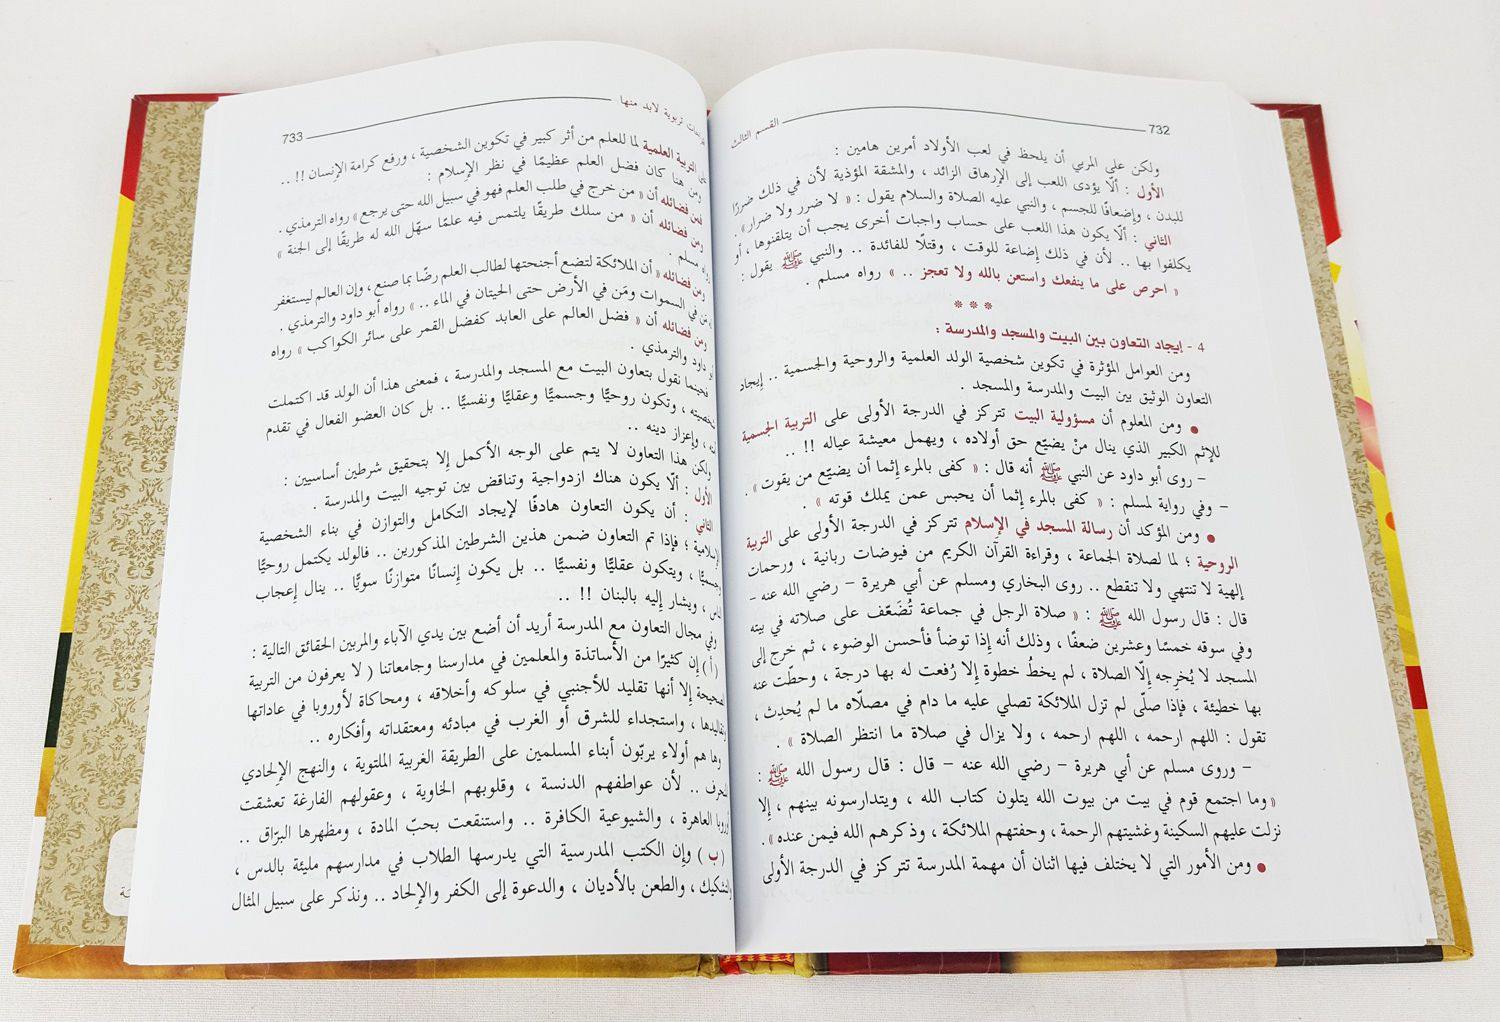 Raising children in Islam (Arabic) including 2 books - Arabian Shopping Zone